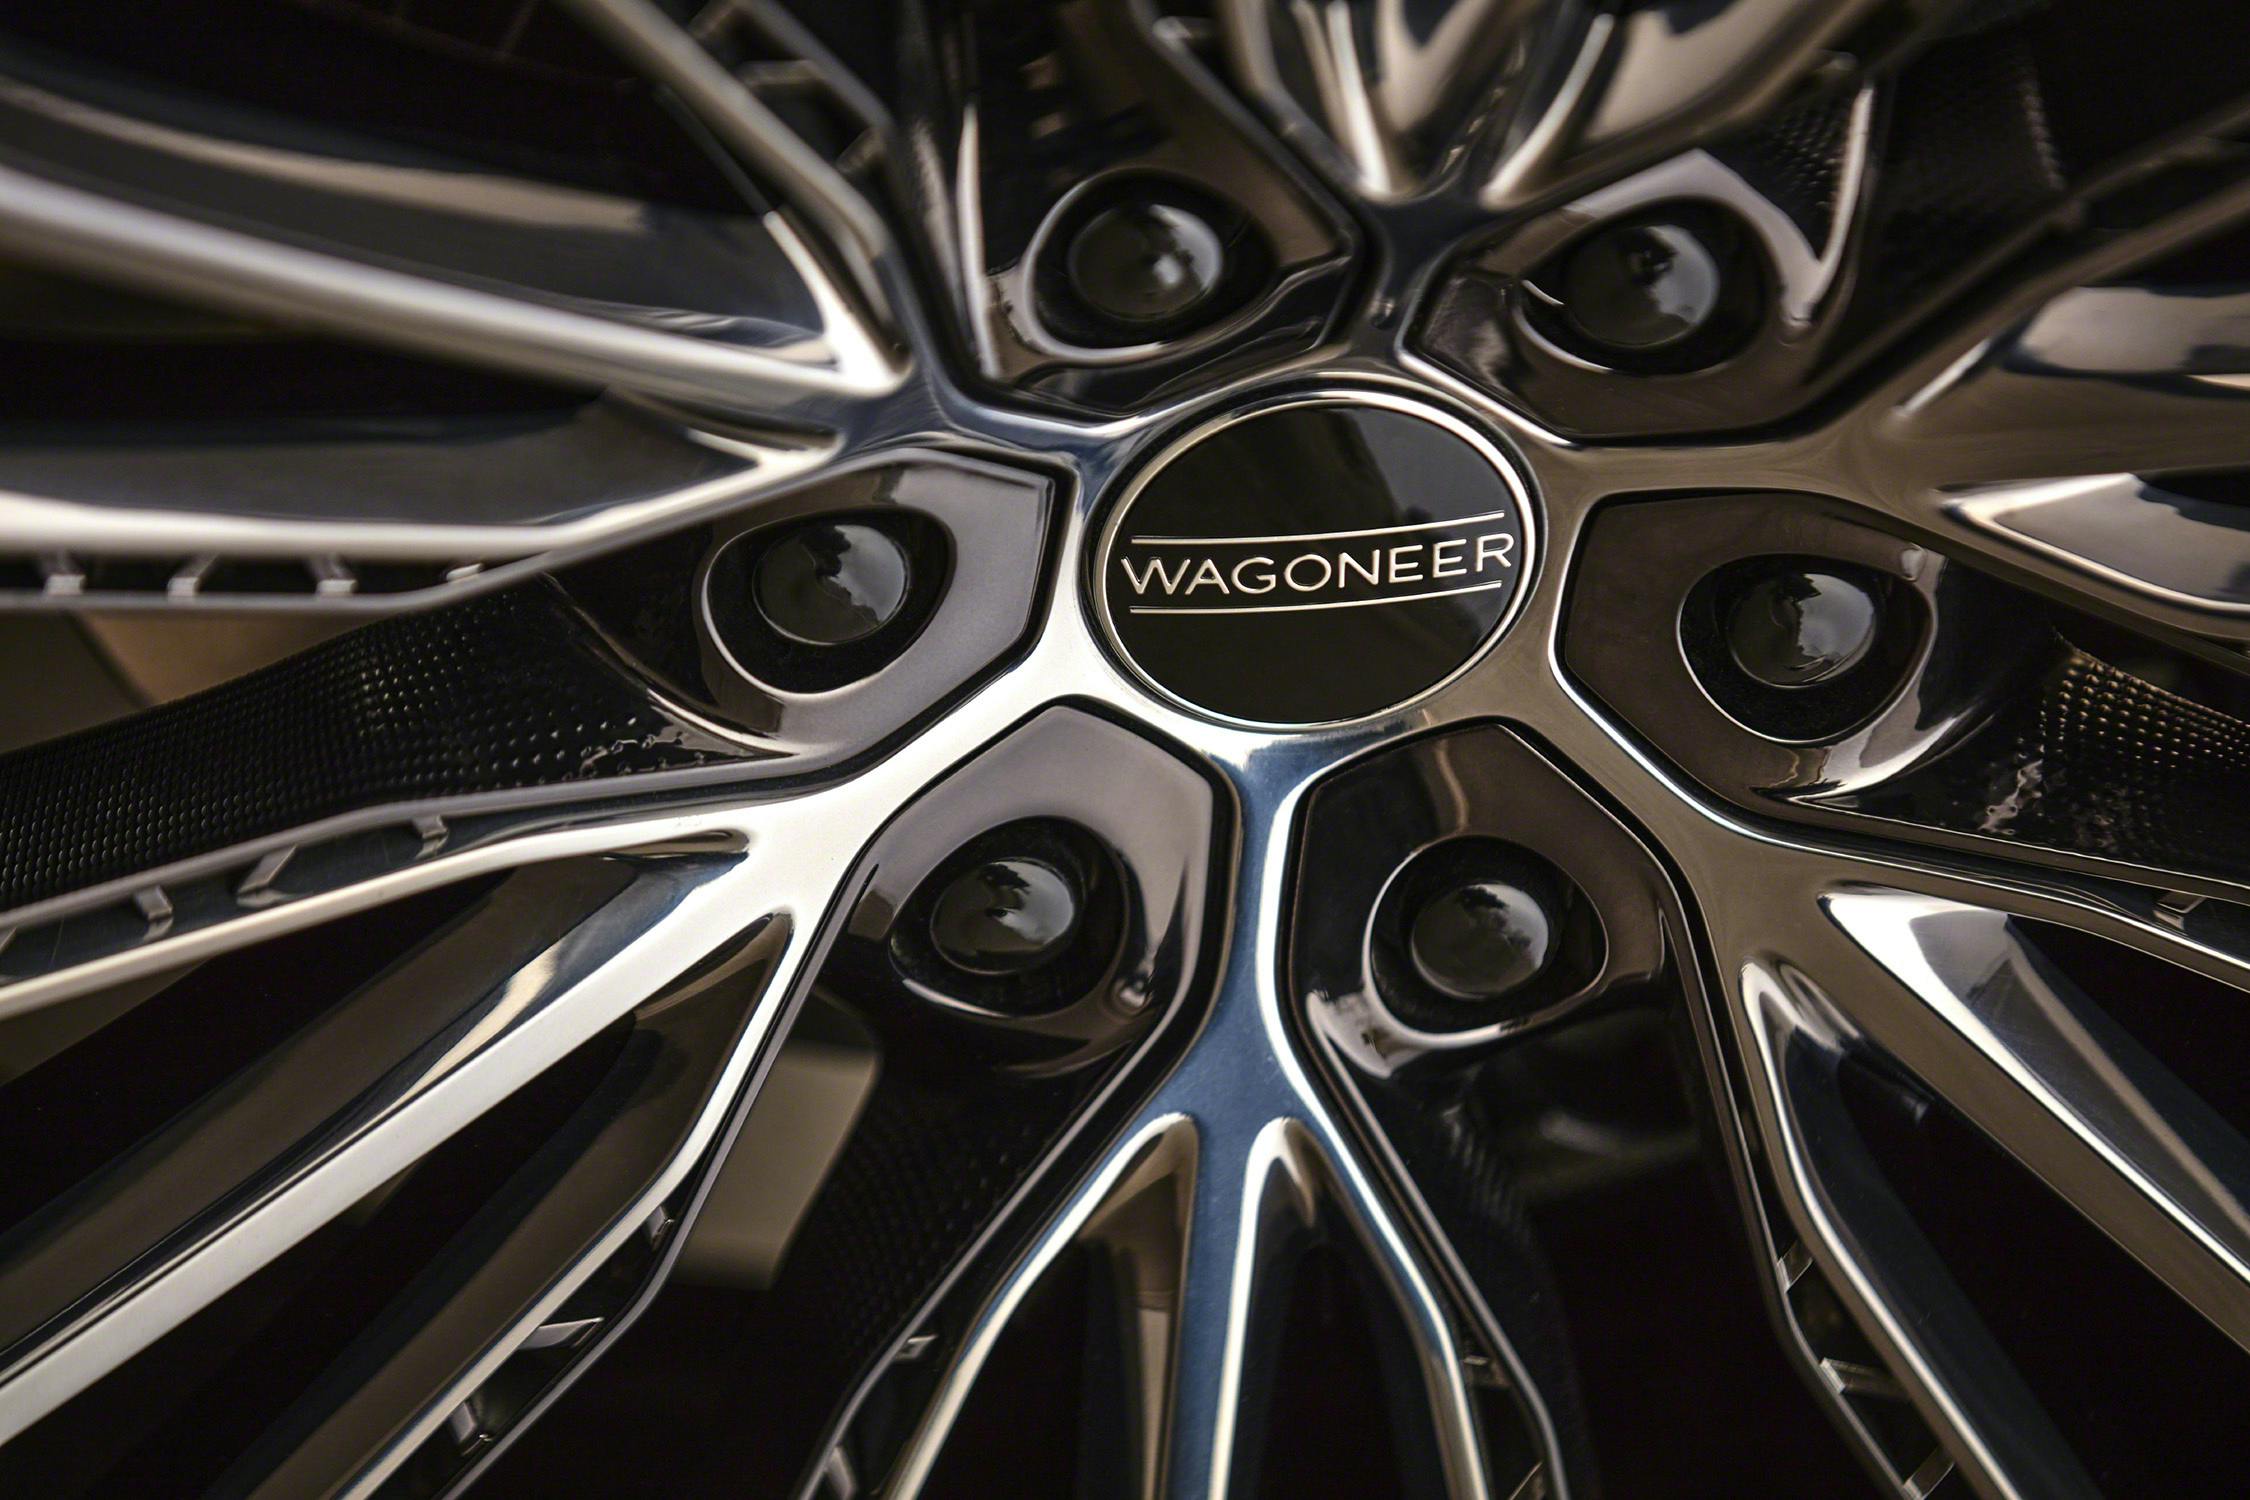 Grand Wagoneer Concept wheel close--up